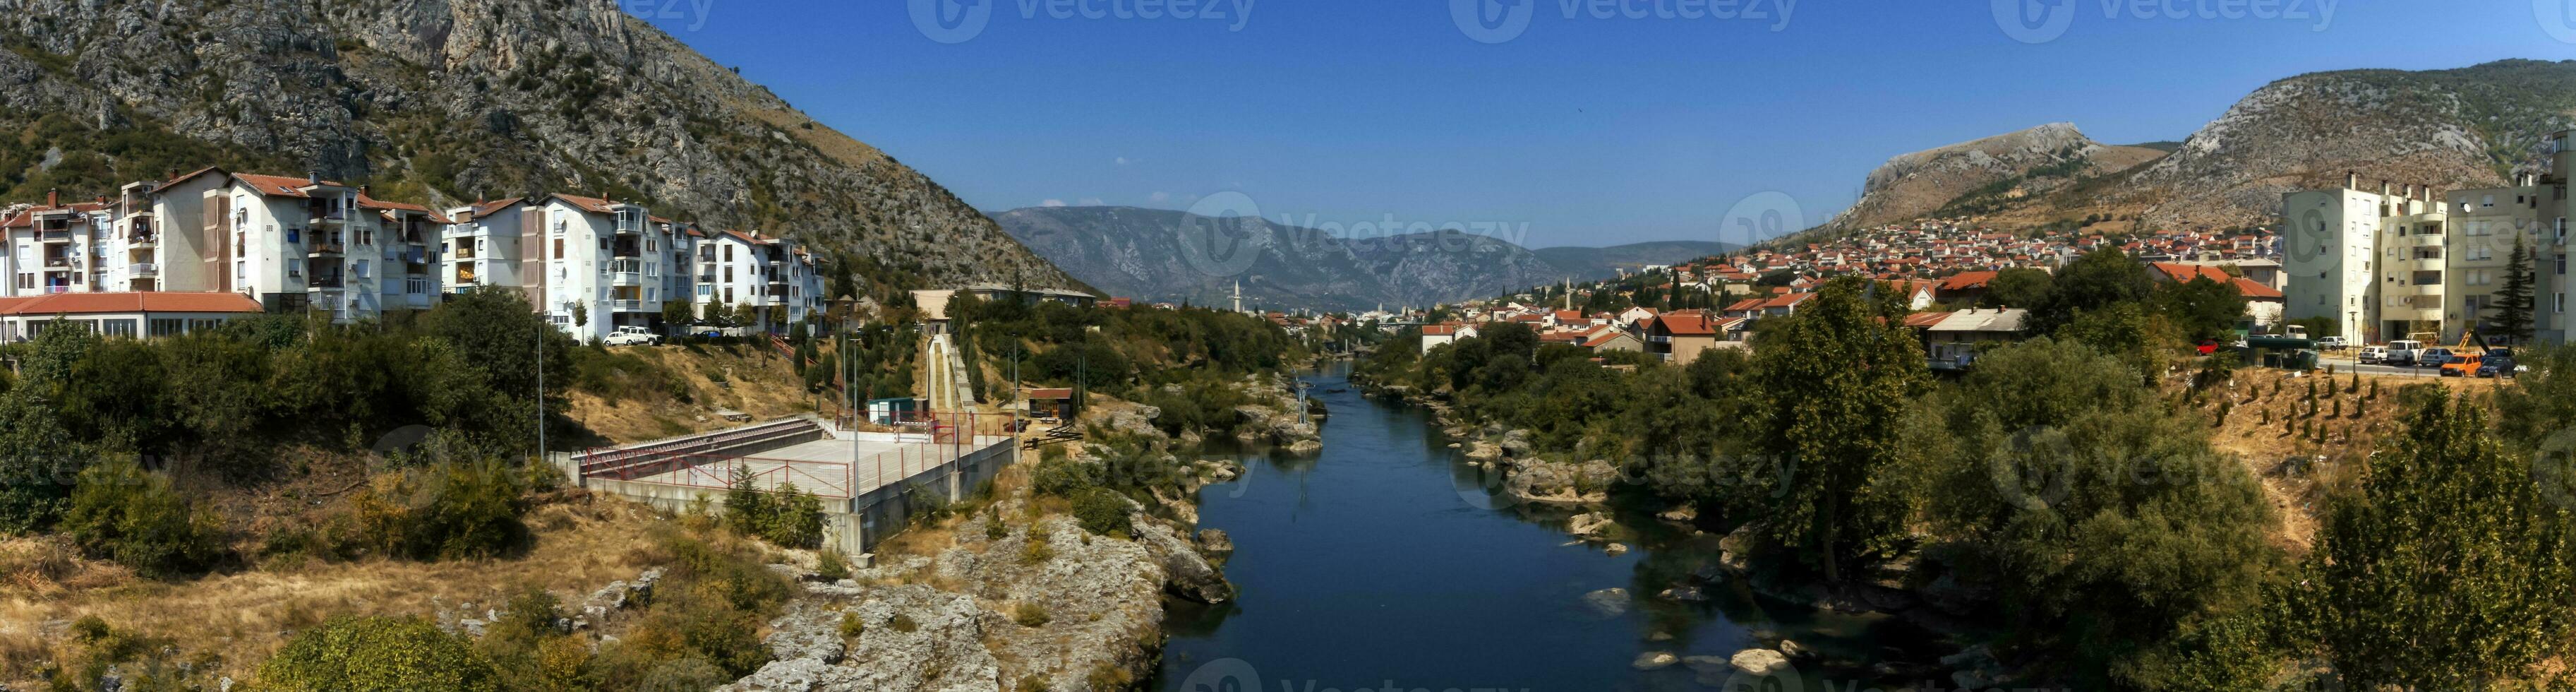 mostar vecchio città, bosnia e erzegovina foto